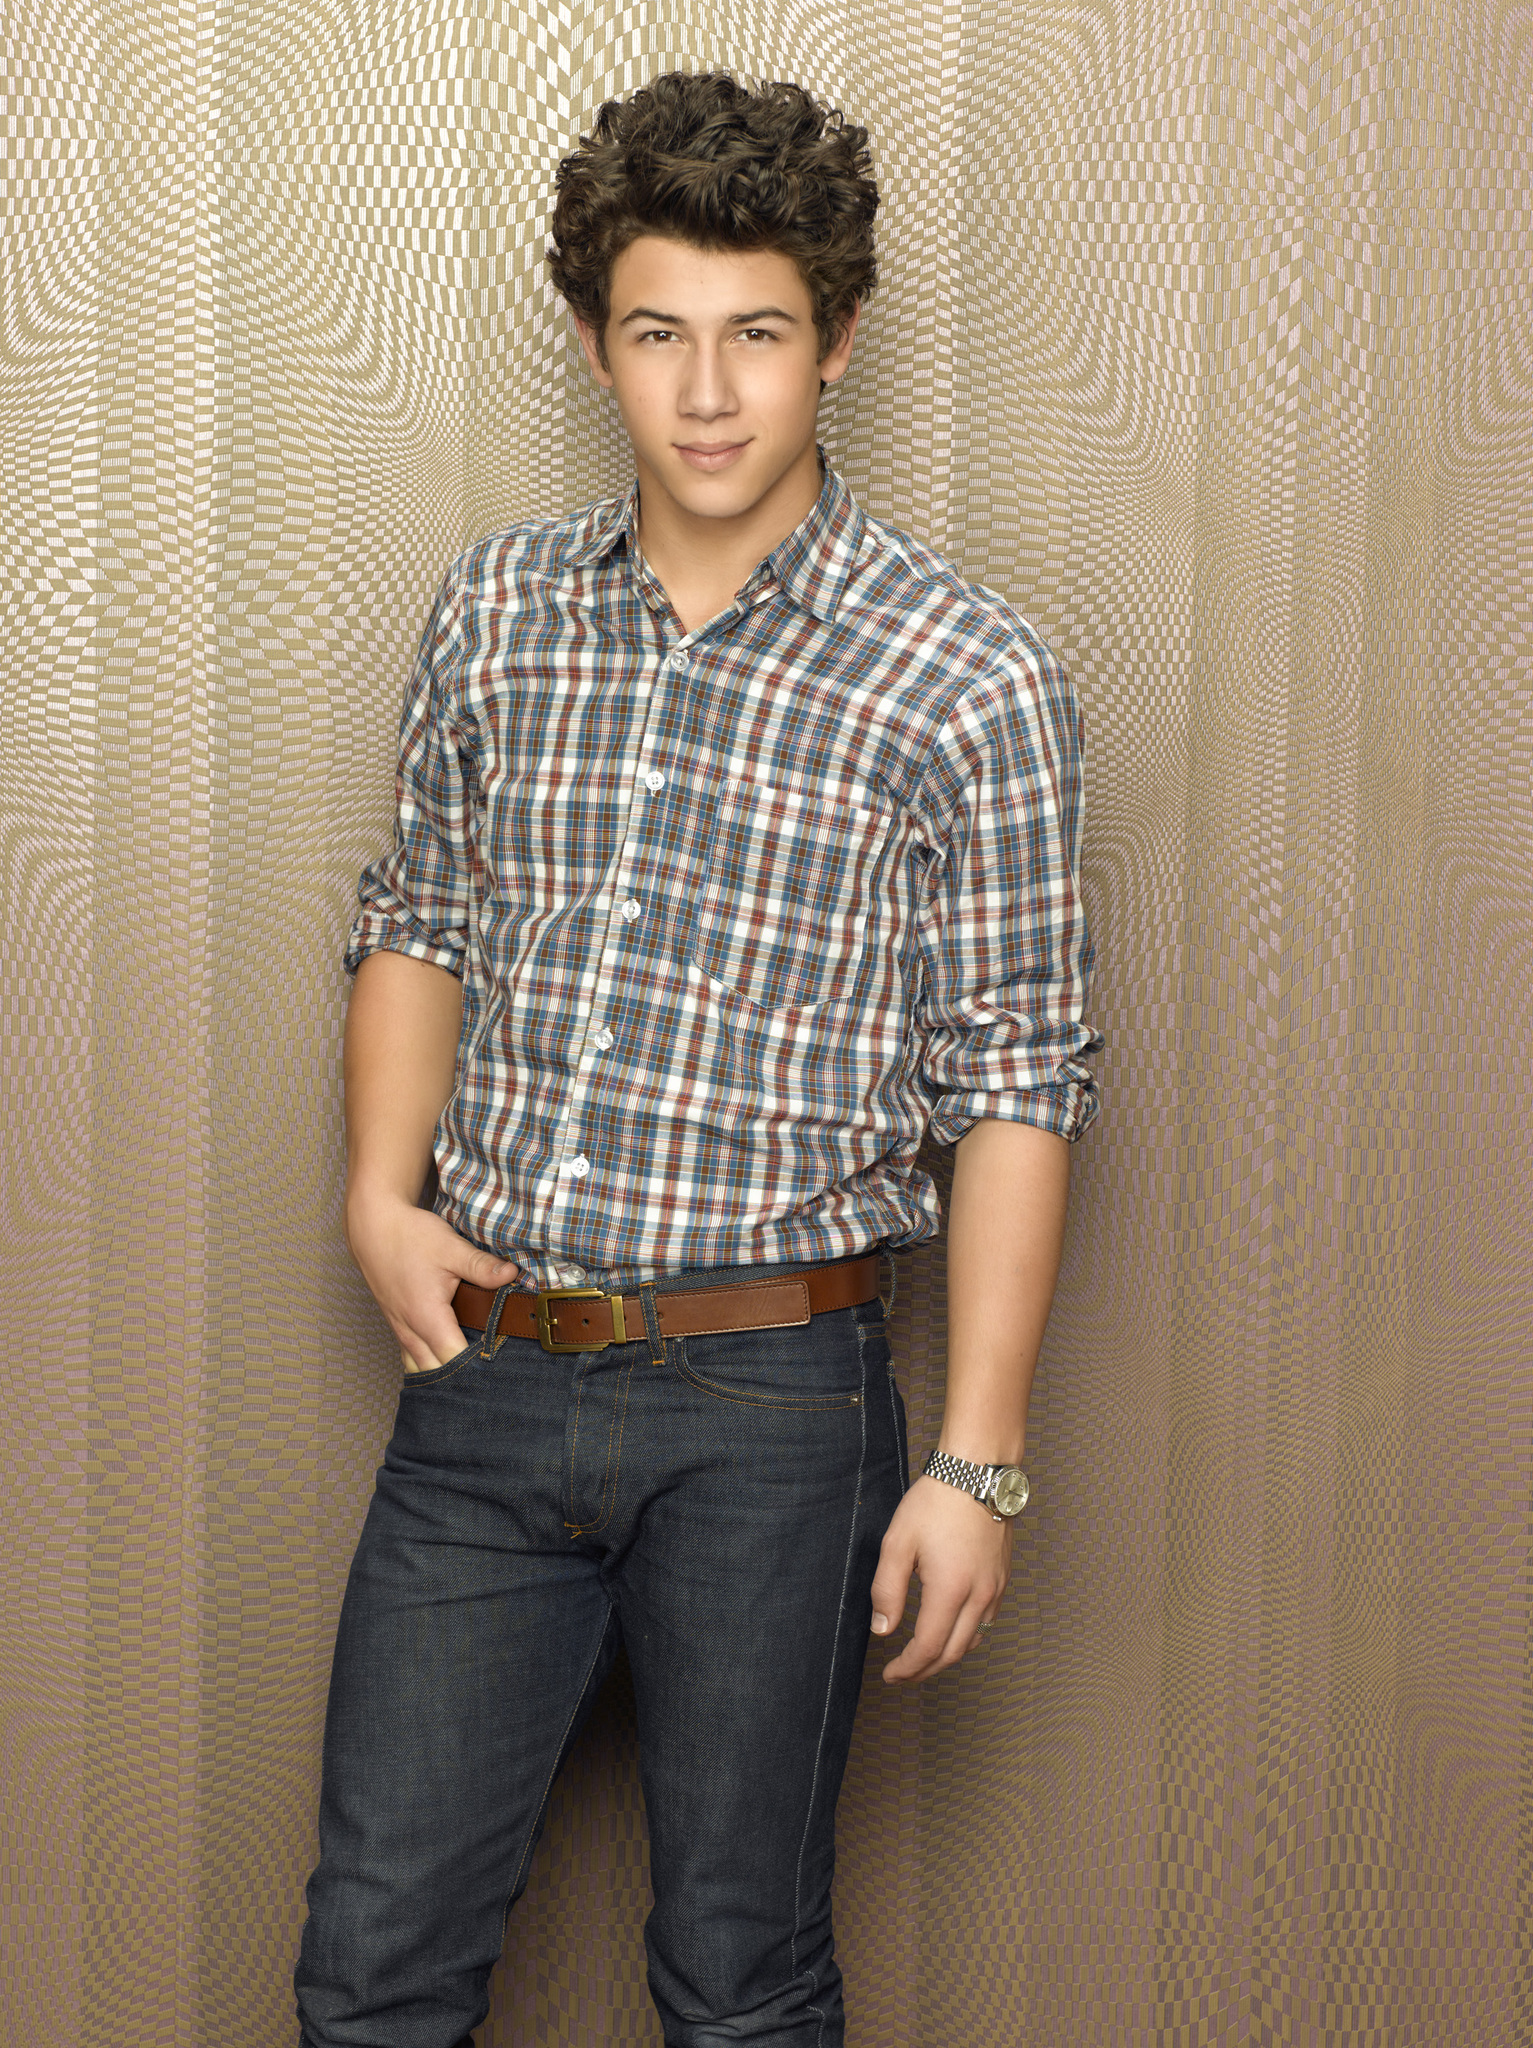 Nick Jonas in Jonas (2009)